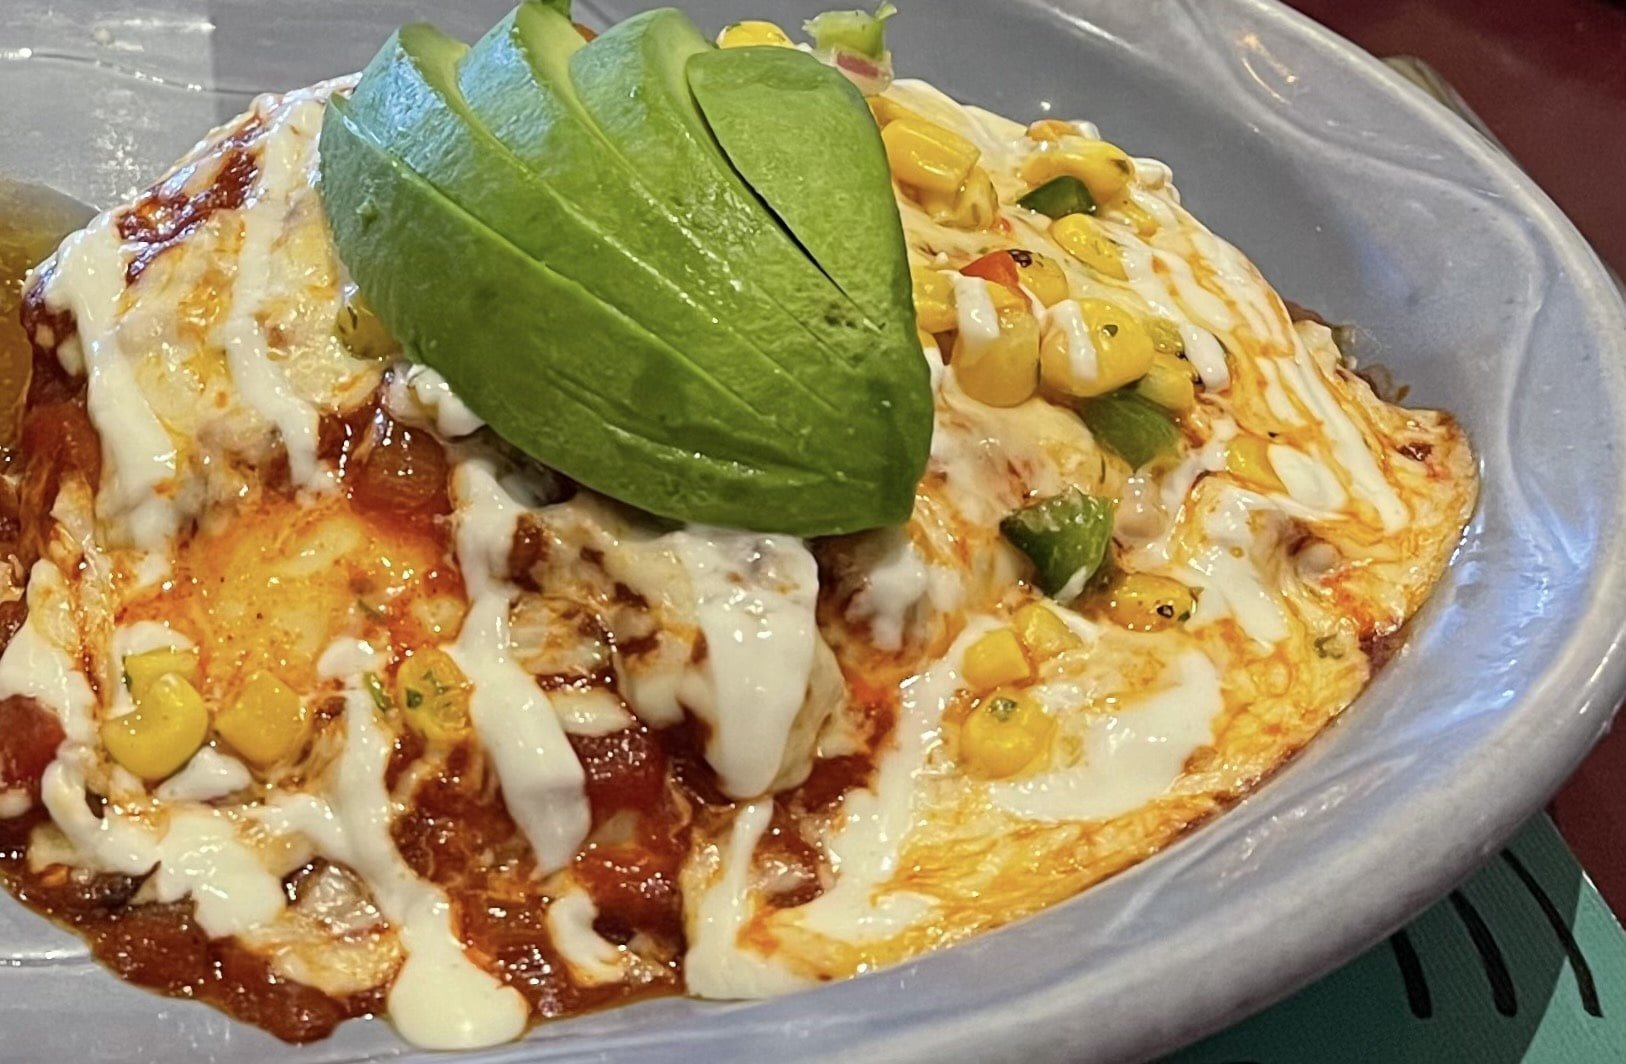 An incredibly cheesy take on Red Stacked Enchiladas, also known as Enchilada Montadas